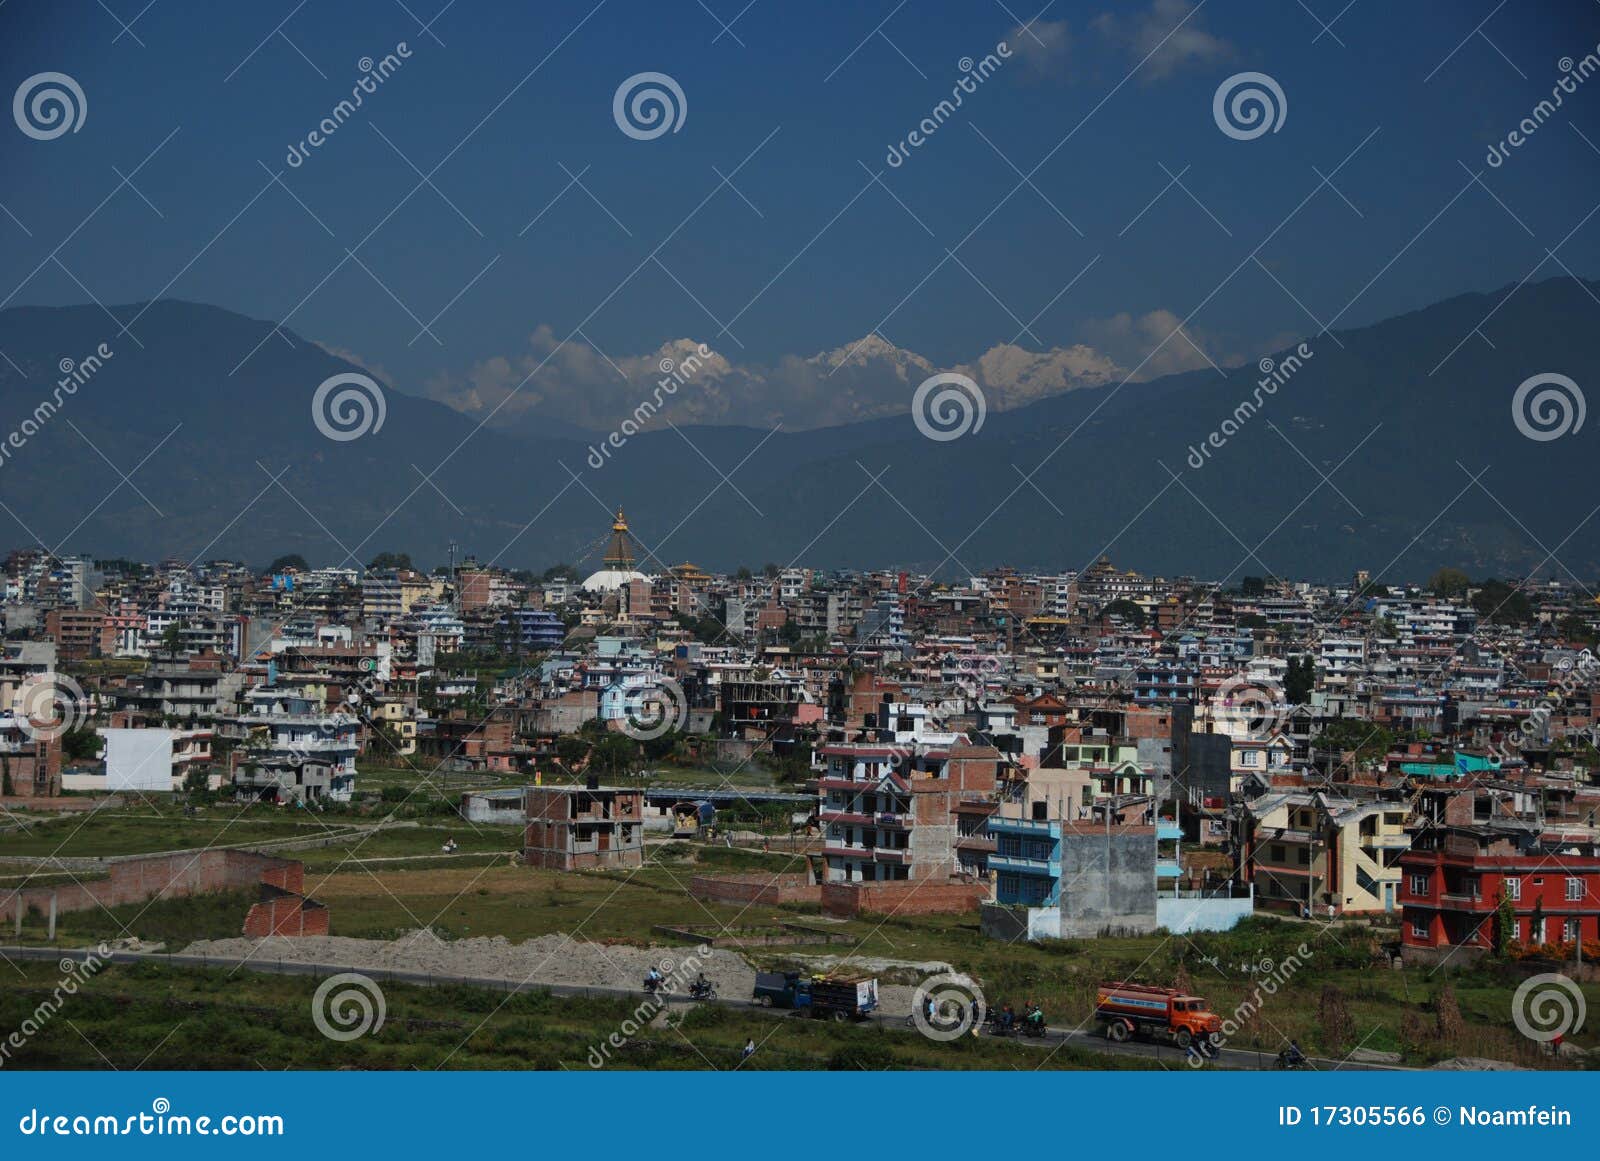 the city of kathmandu